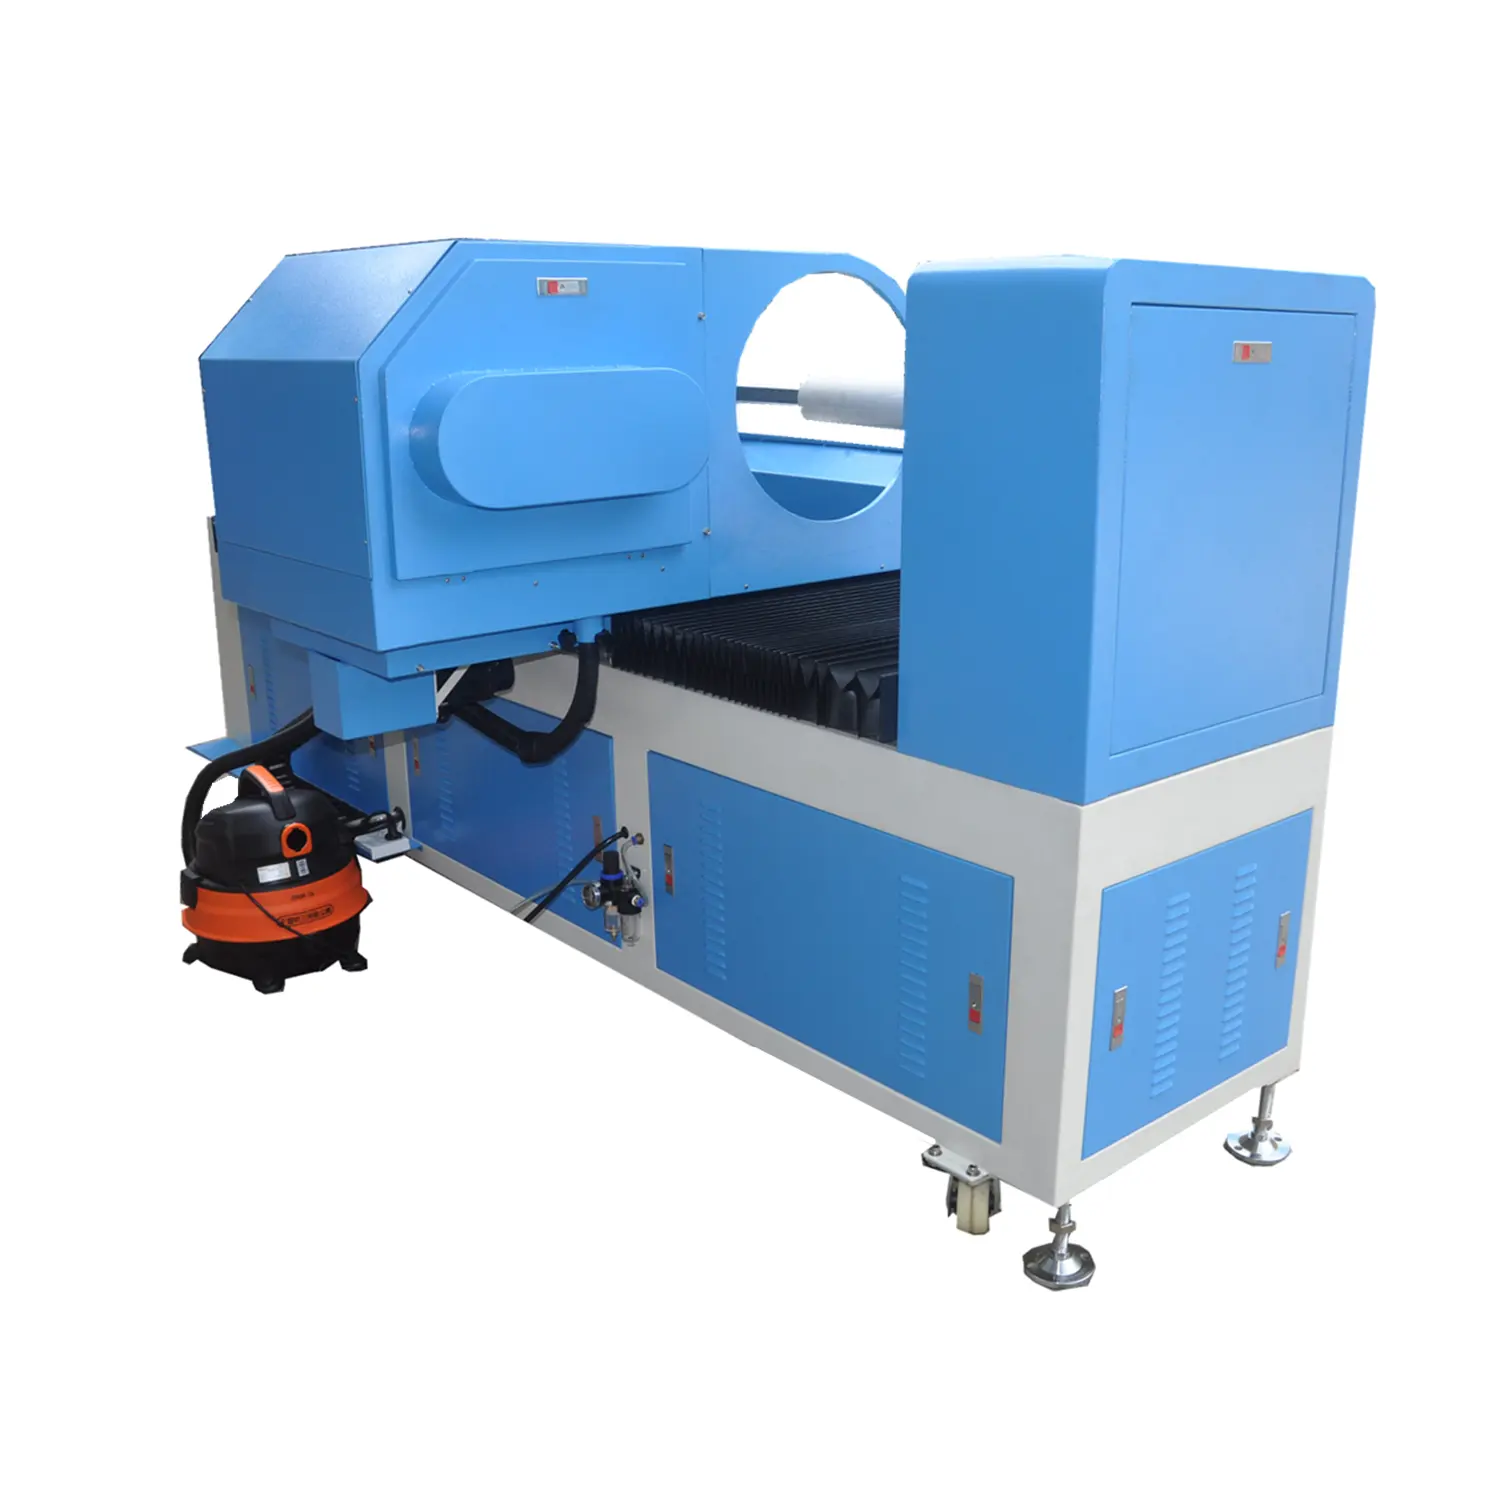 High quality automatic fabric cutter cutting machine industrial fabric cutting machine